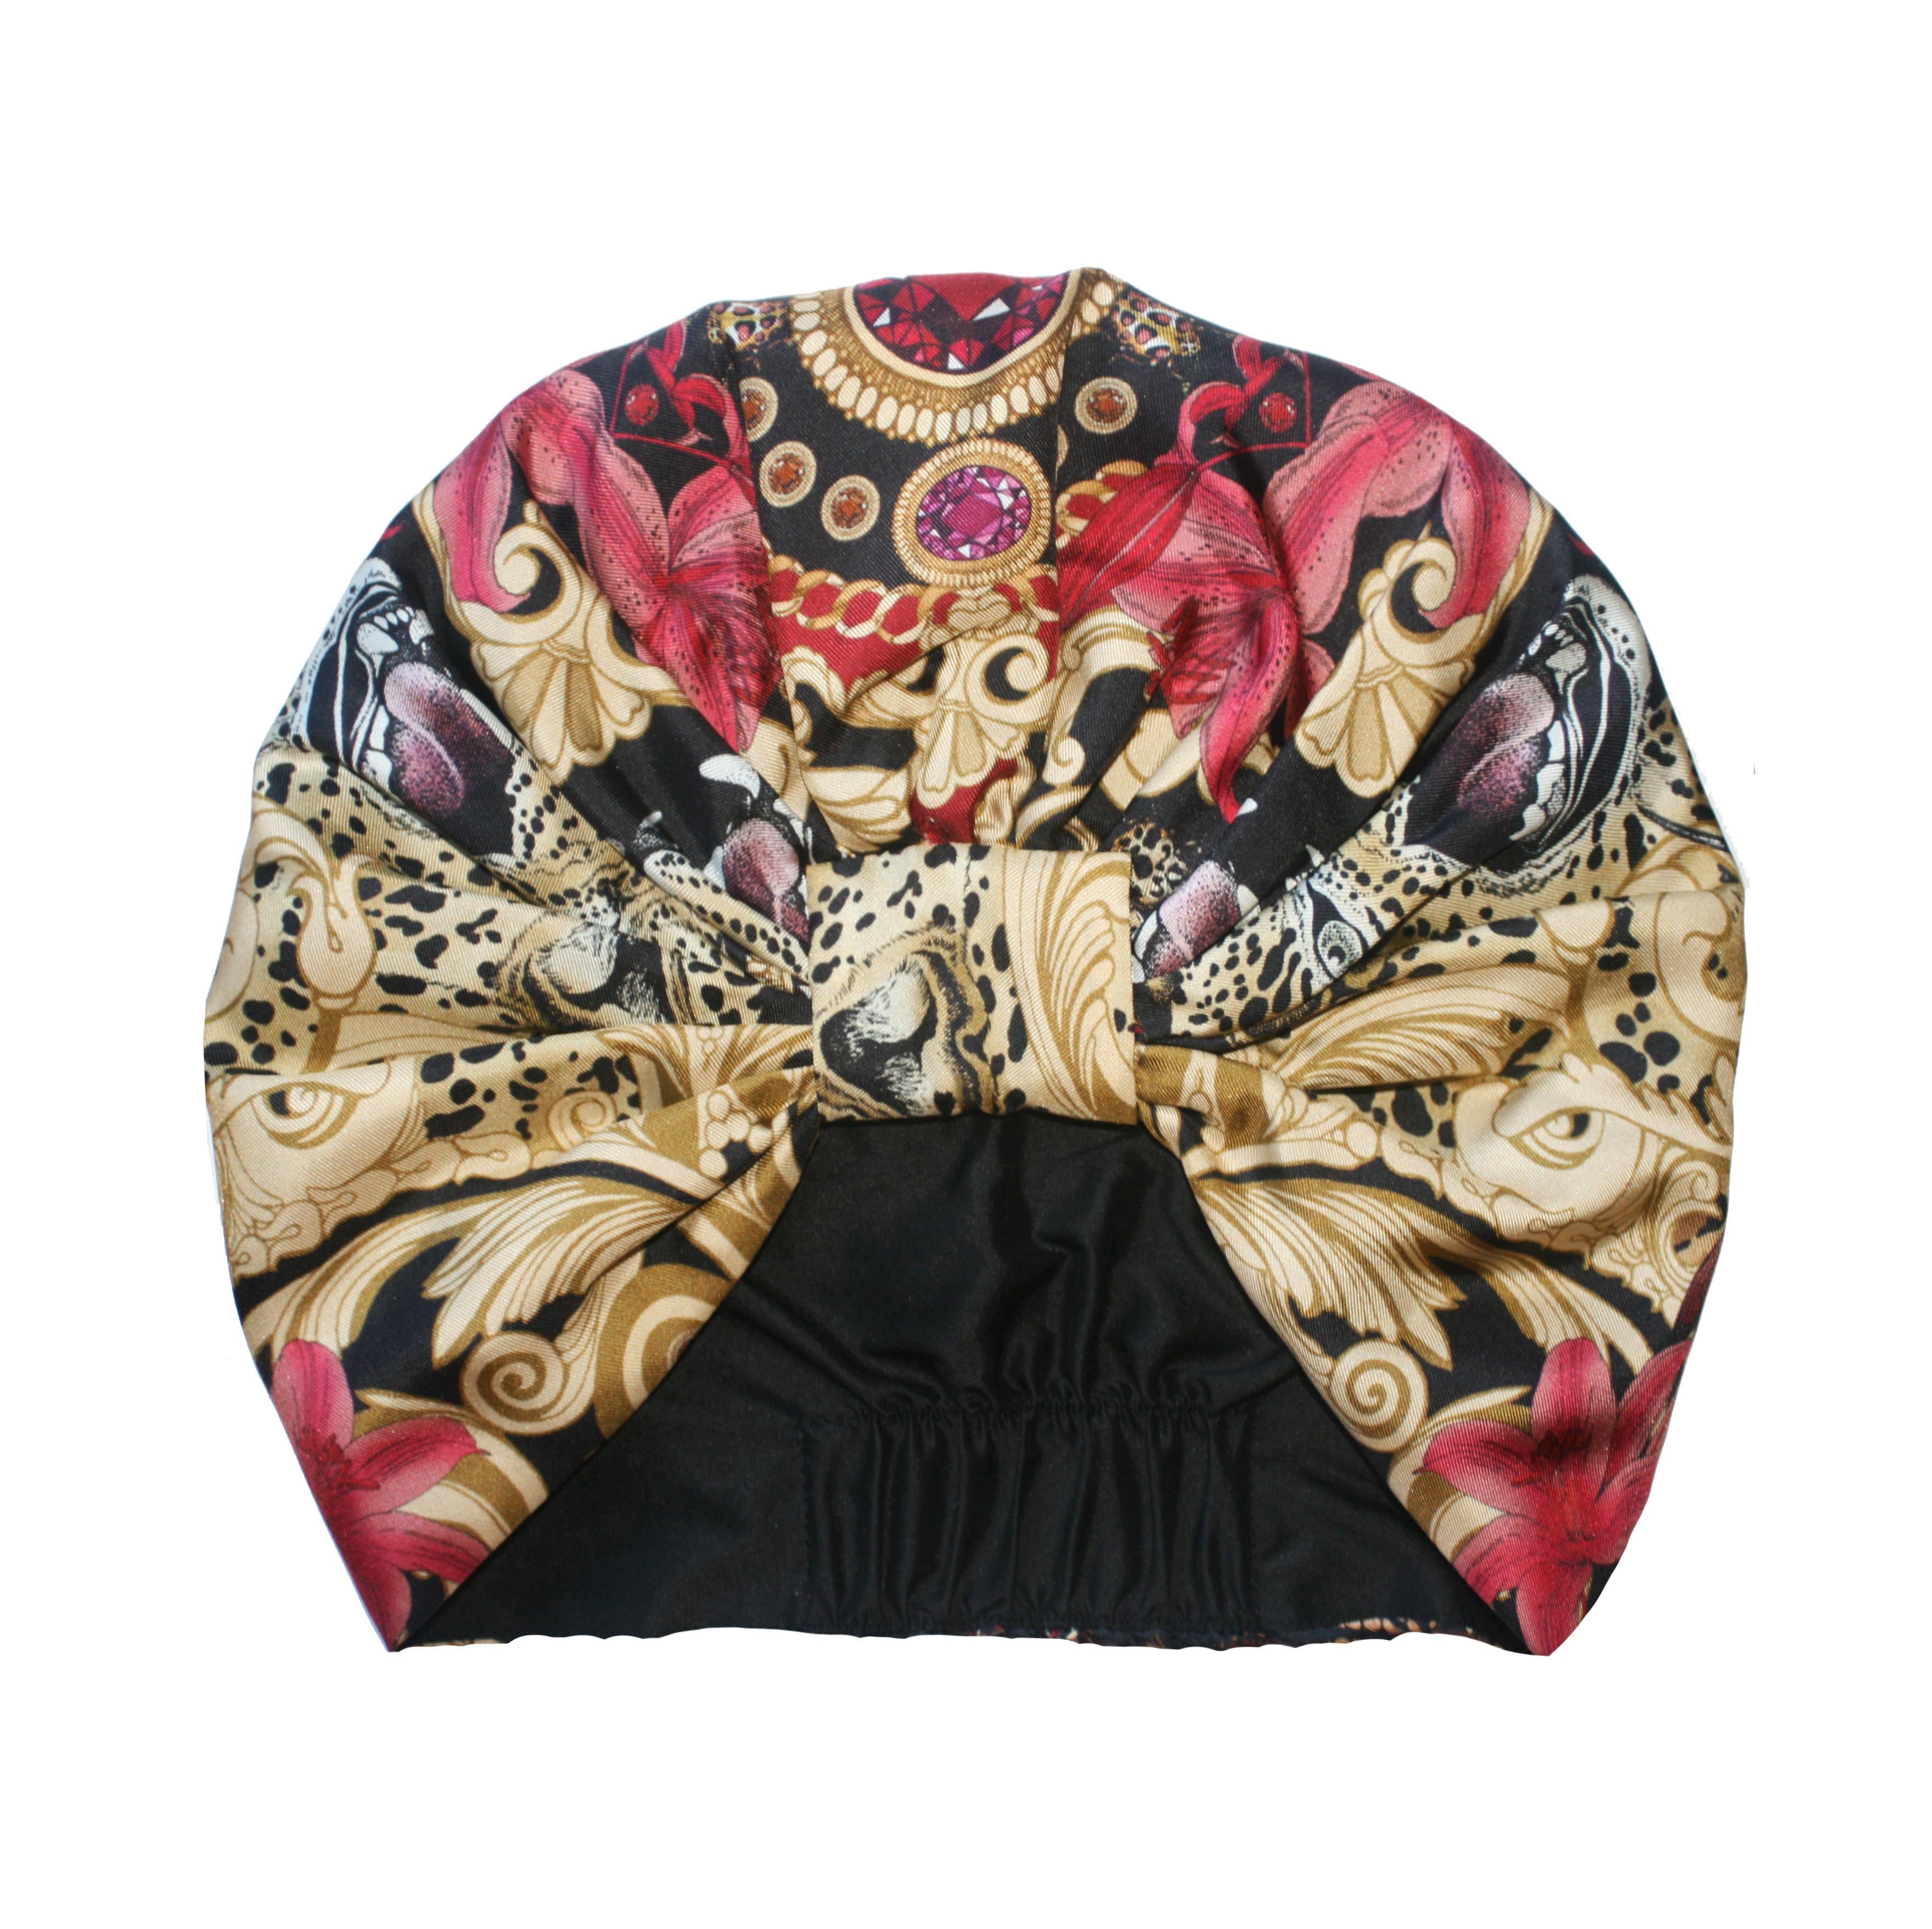 The Leopard Baroque Silk Turban